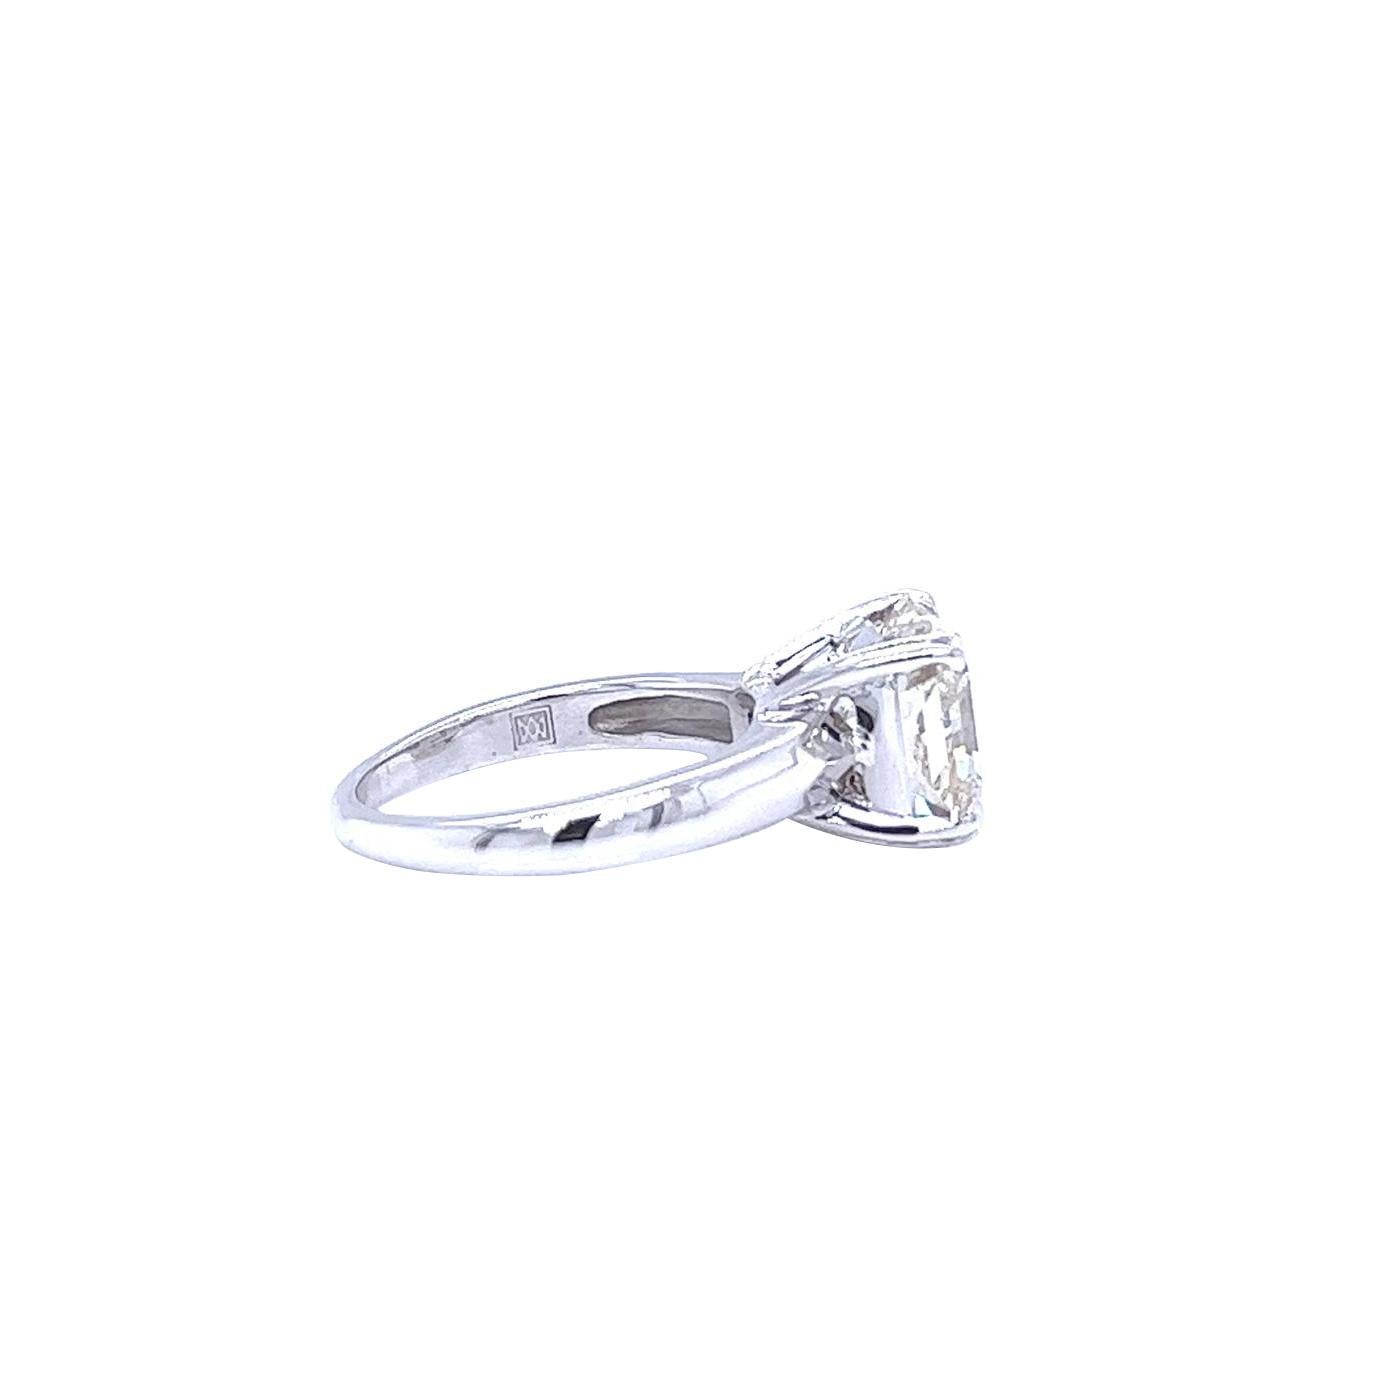 4.28 Carat Natural Square Radiant Cut Diamond Engagement Ring in Platinum In Good Condition For Sale In Aventura, FL